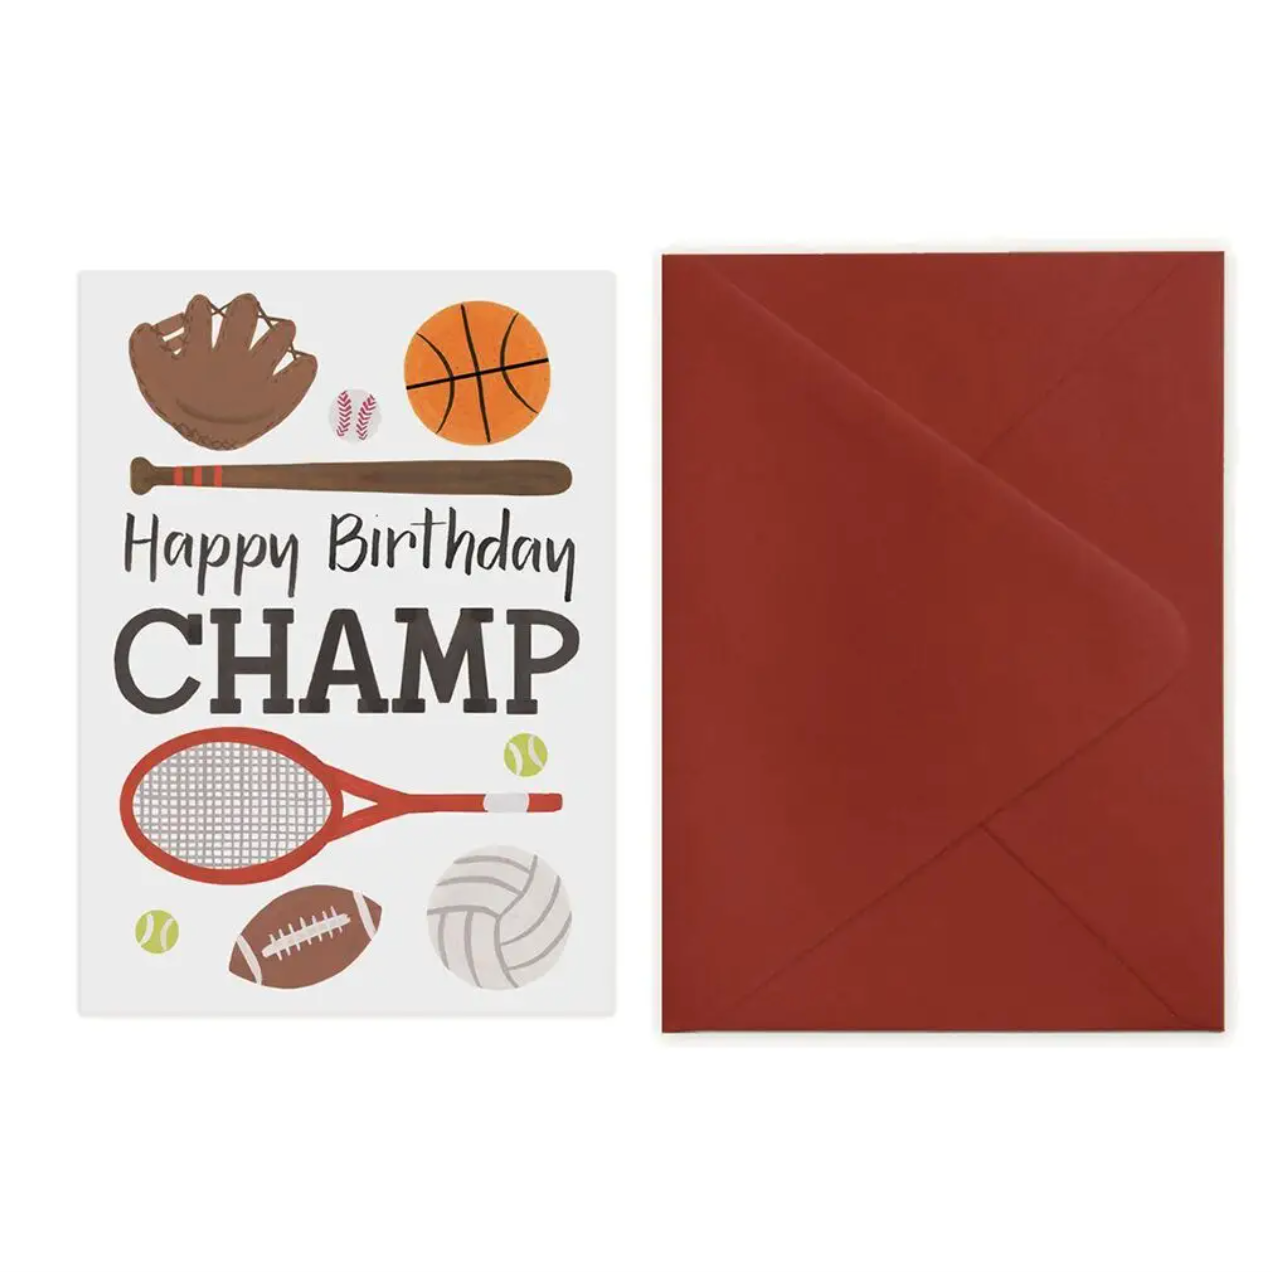 champ birthday card